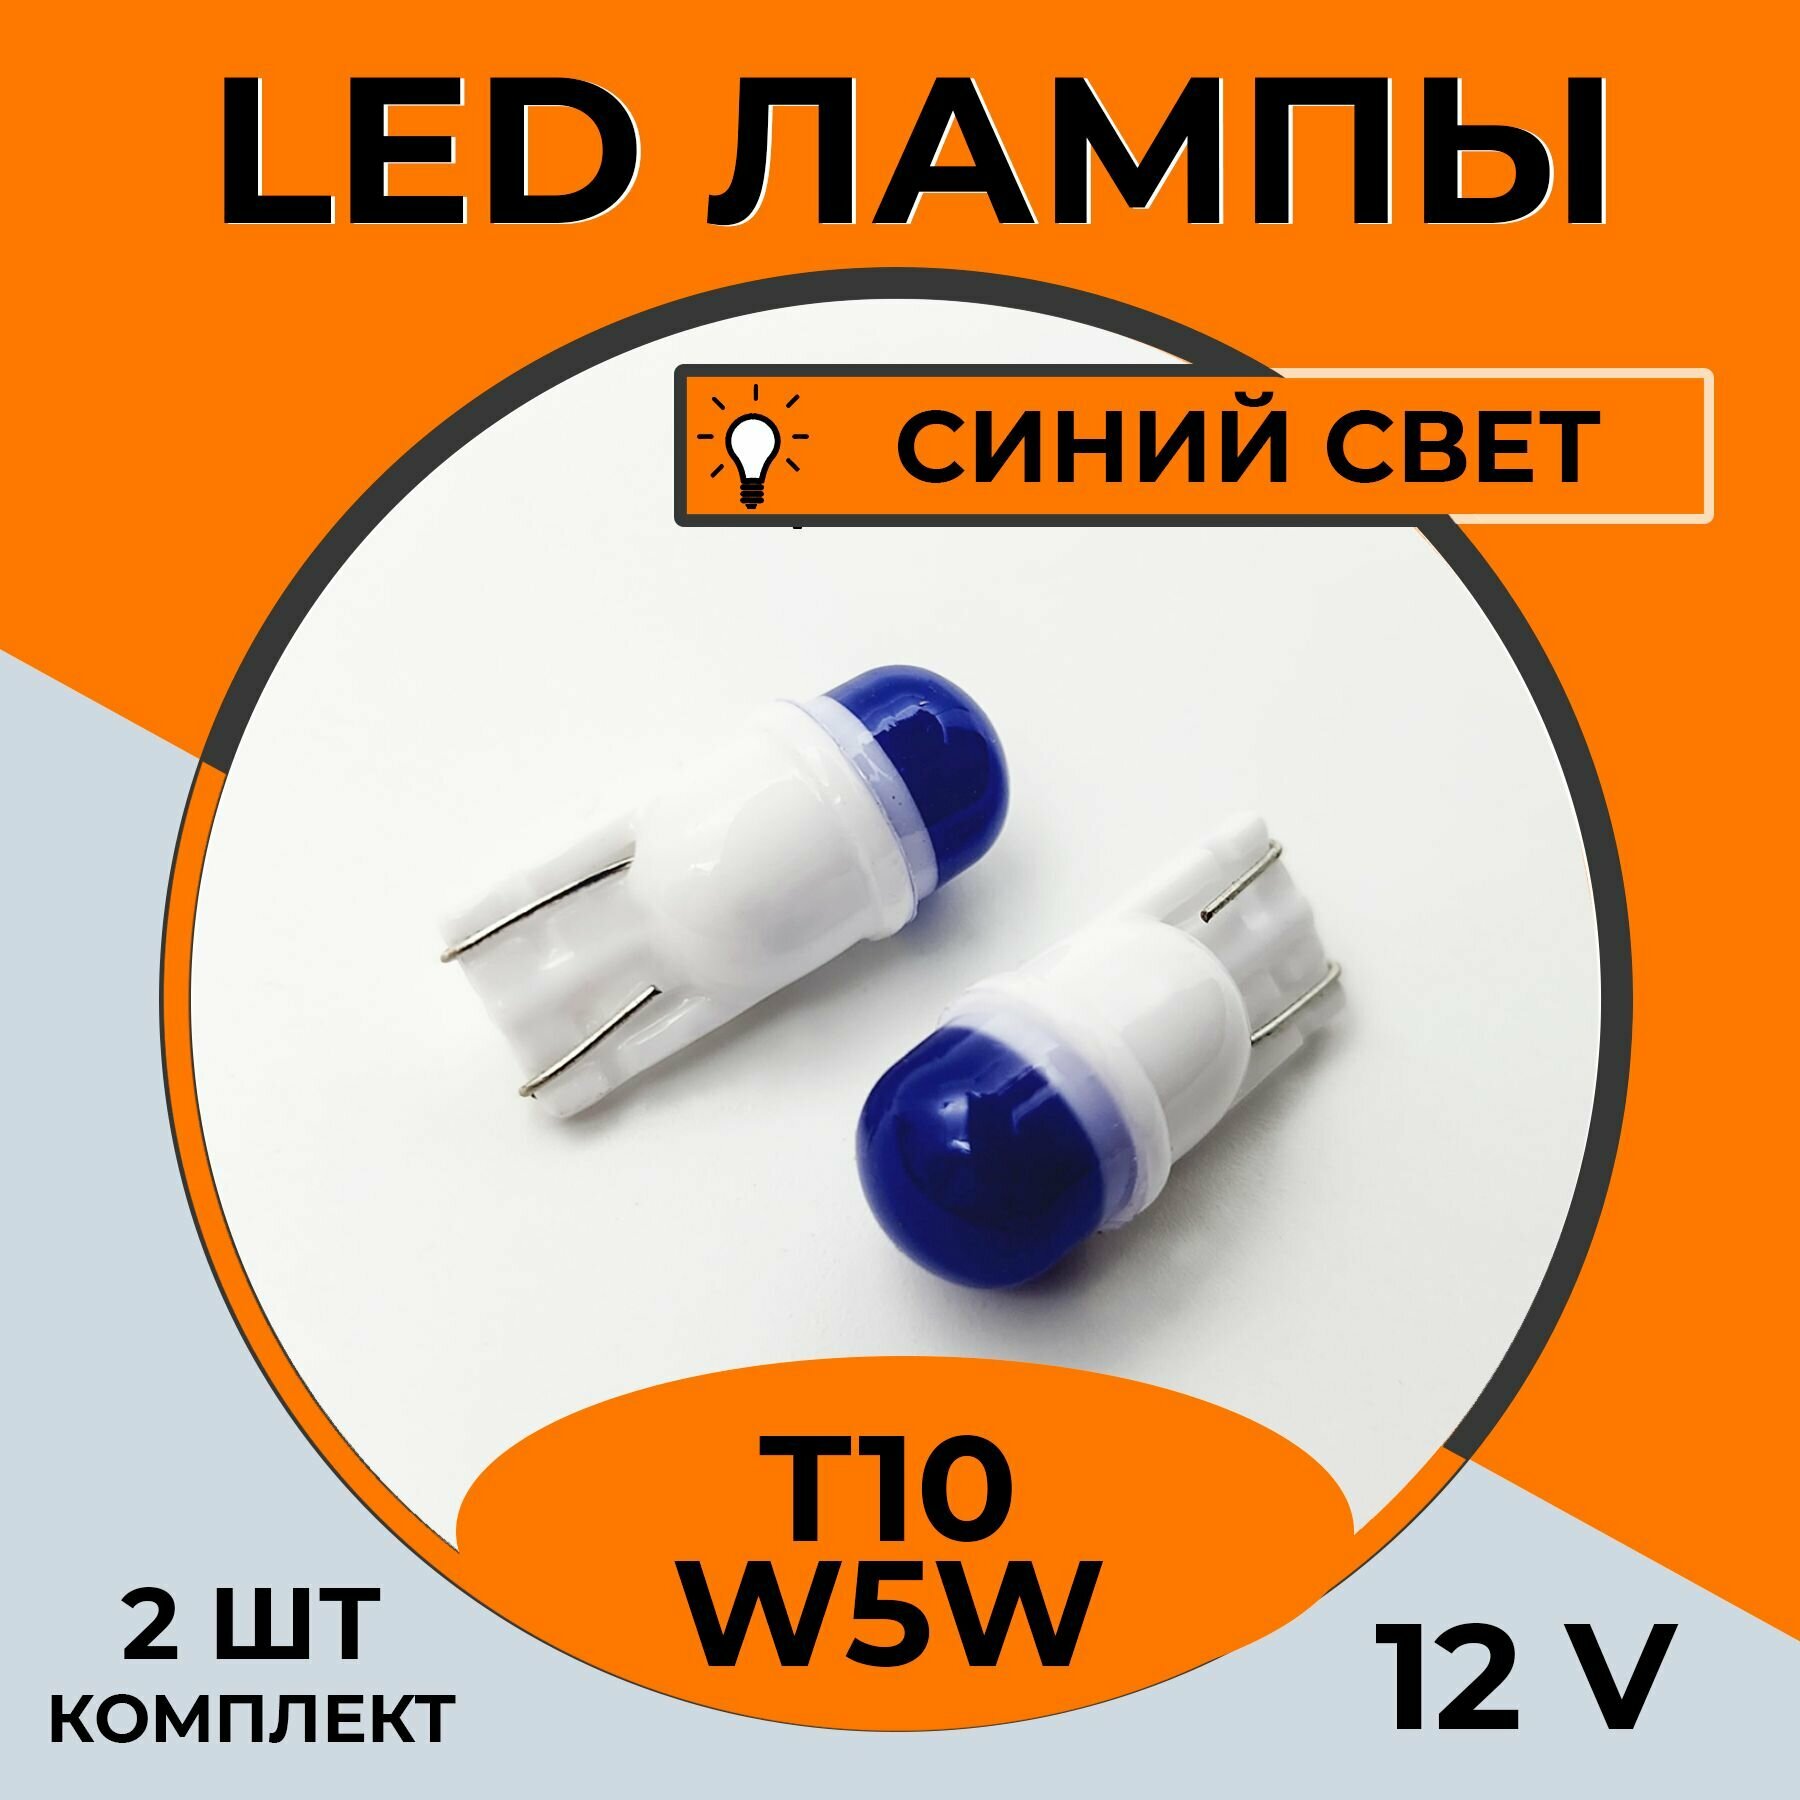 Автомобильная светодиодная LED лампа T10 W5W для подсветки салона, багажника, 12в синий свет, 2 шт